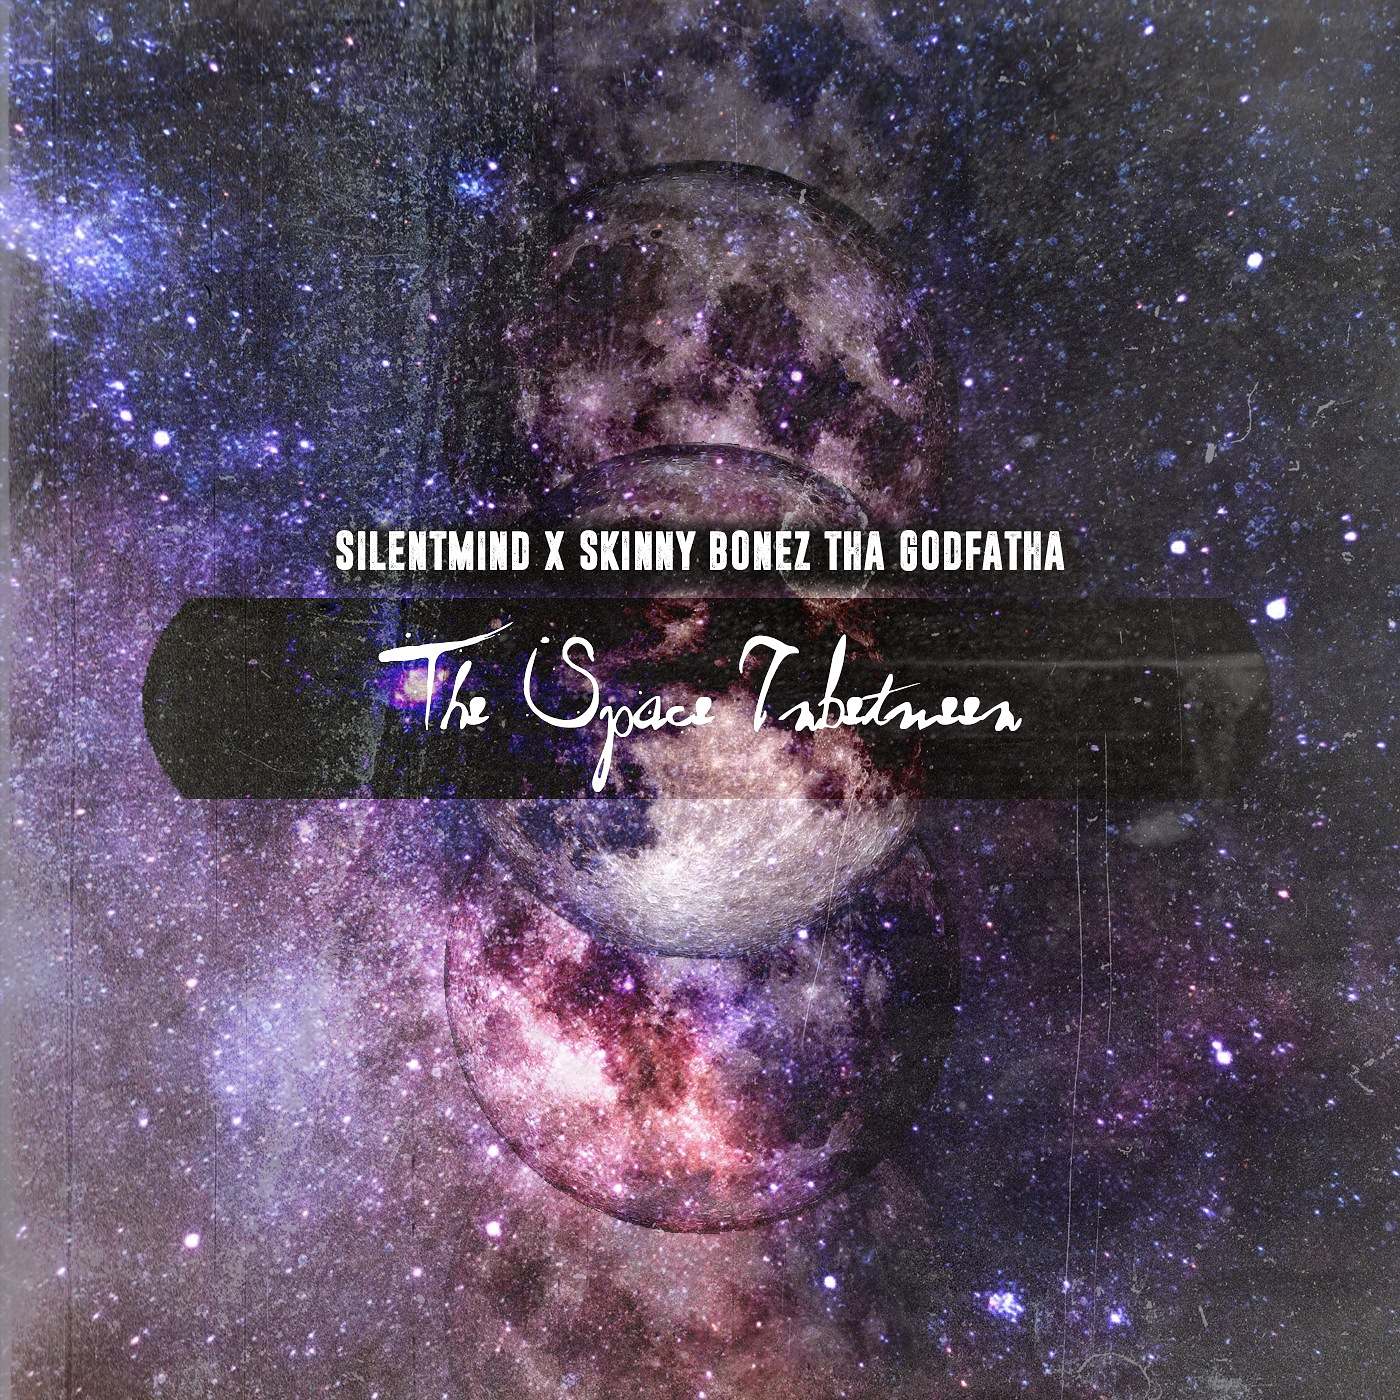 Stream Silentmind & Skinny Bonez Tha Godfatha’s ‘The Space Inbetween’ EP